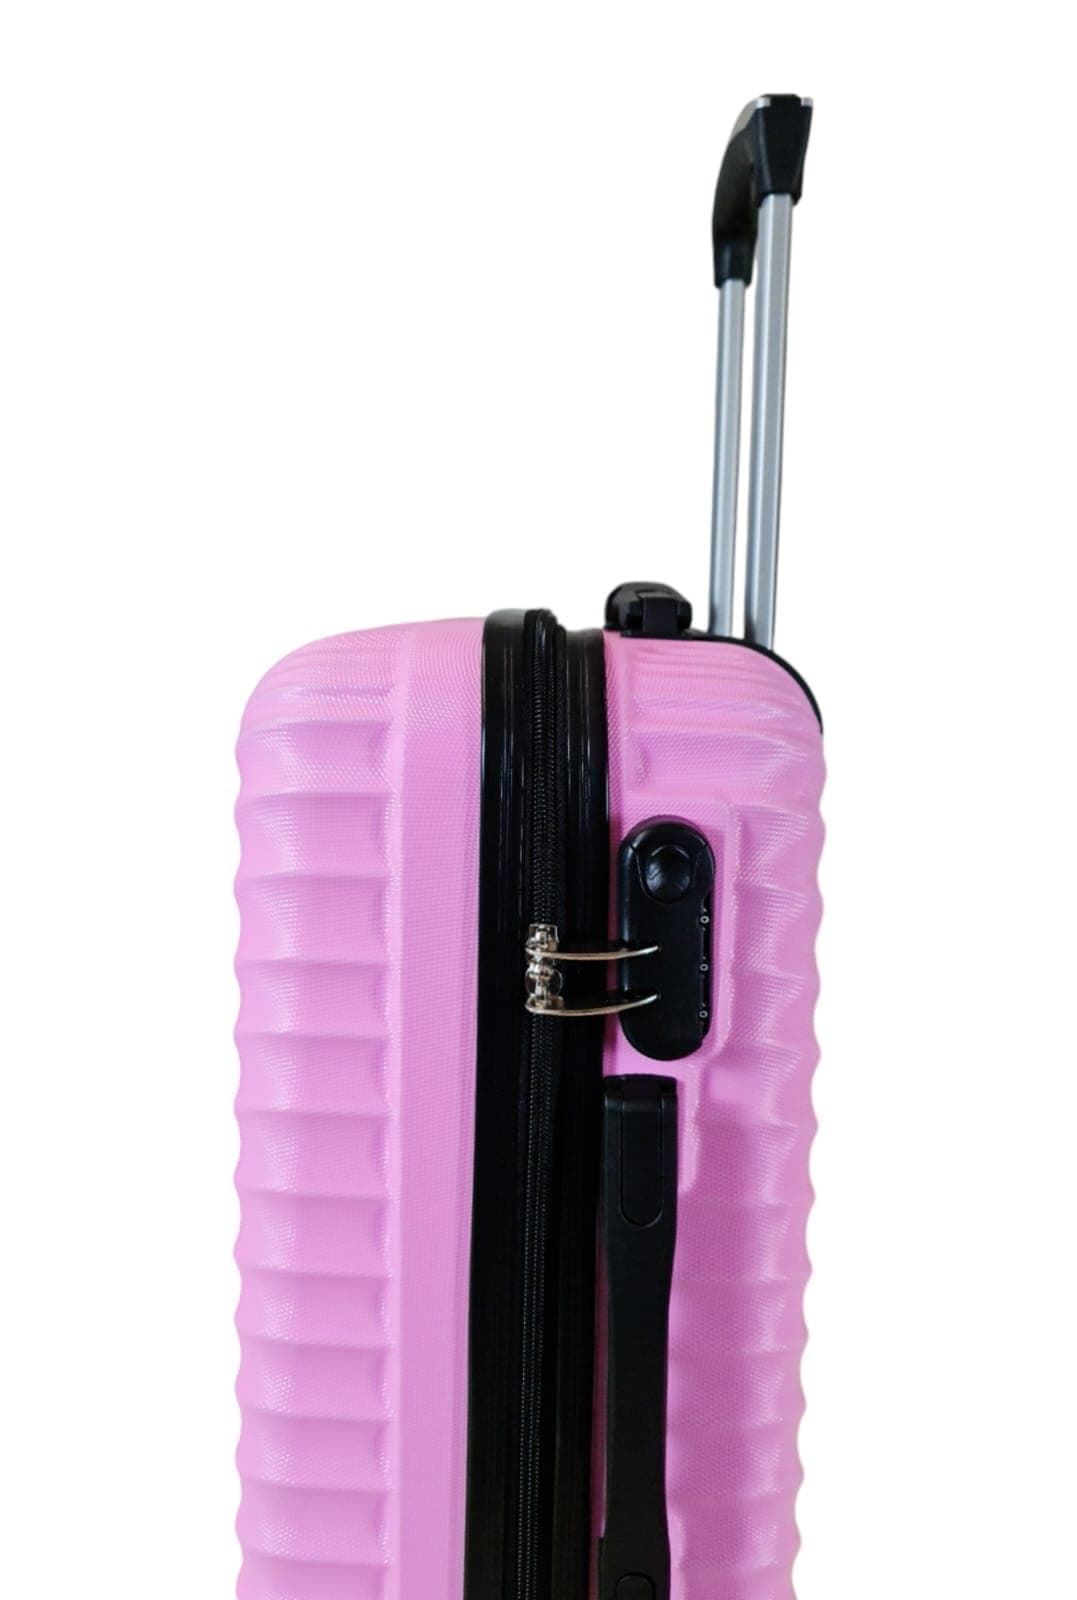 Maleta de Viaje Tamaño Cabina VIP Peso 10 kilos Material ABS Barata Medidas 55x40x20 color Rosa Barbie - Imagen 11